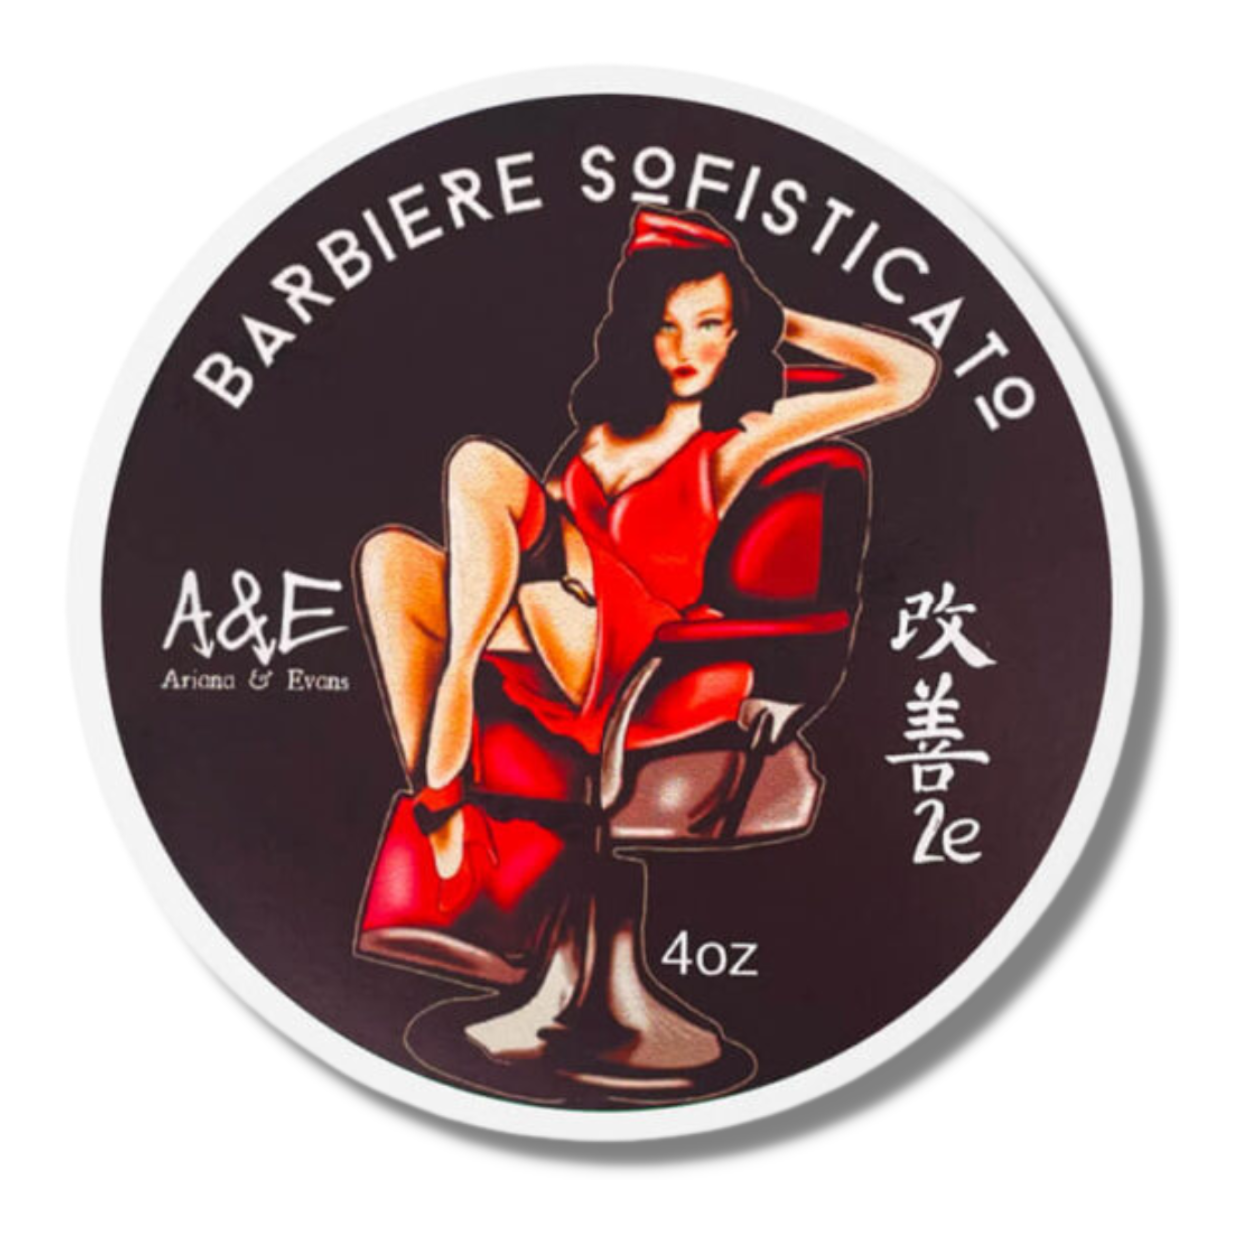 Ariana & Evans Barbiere Sofisticato K2E Shaving Soap | Agent Shave